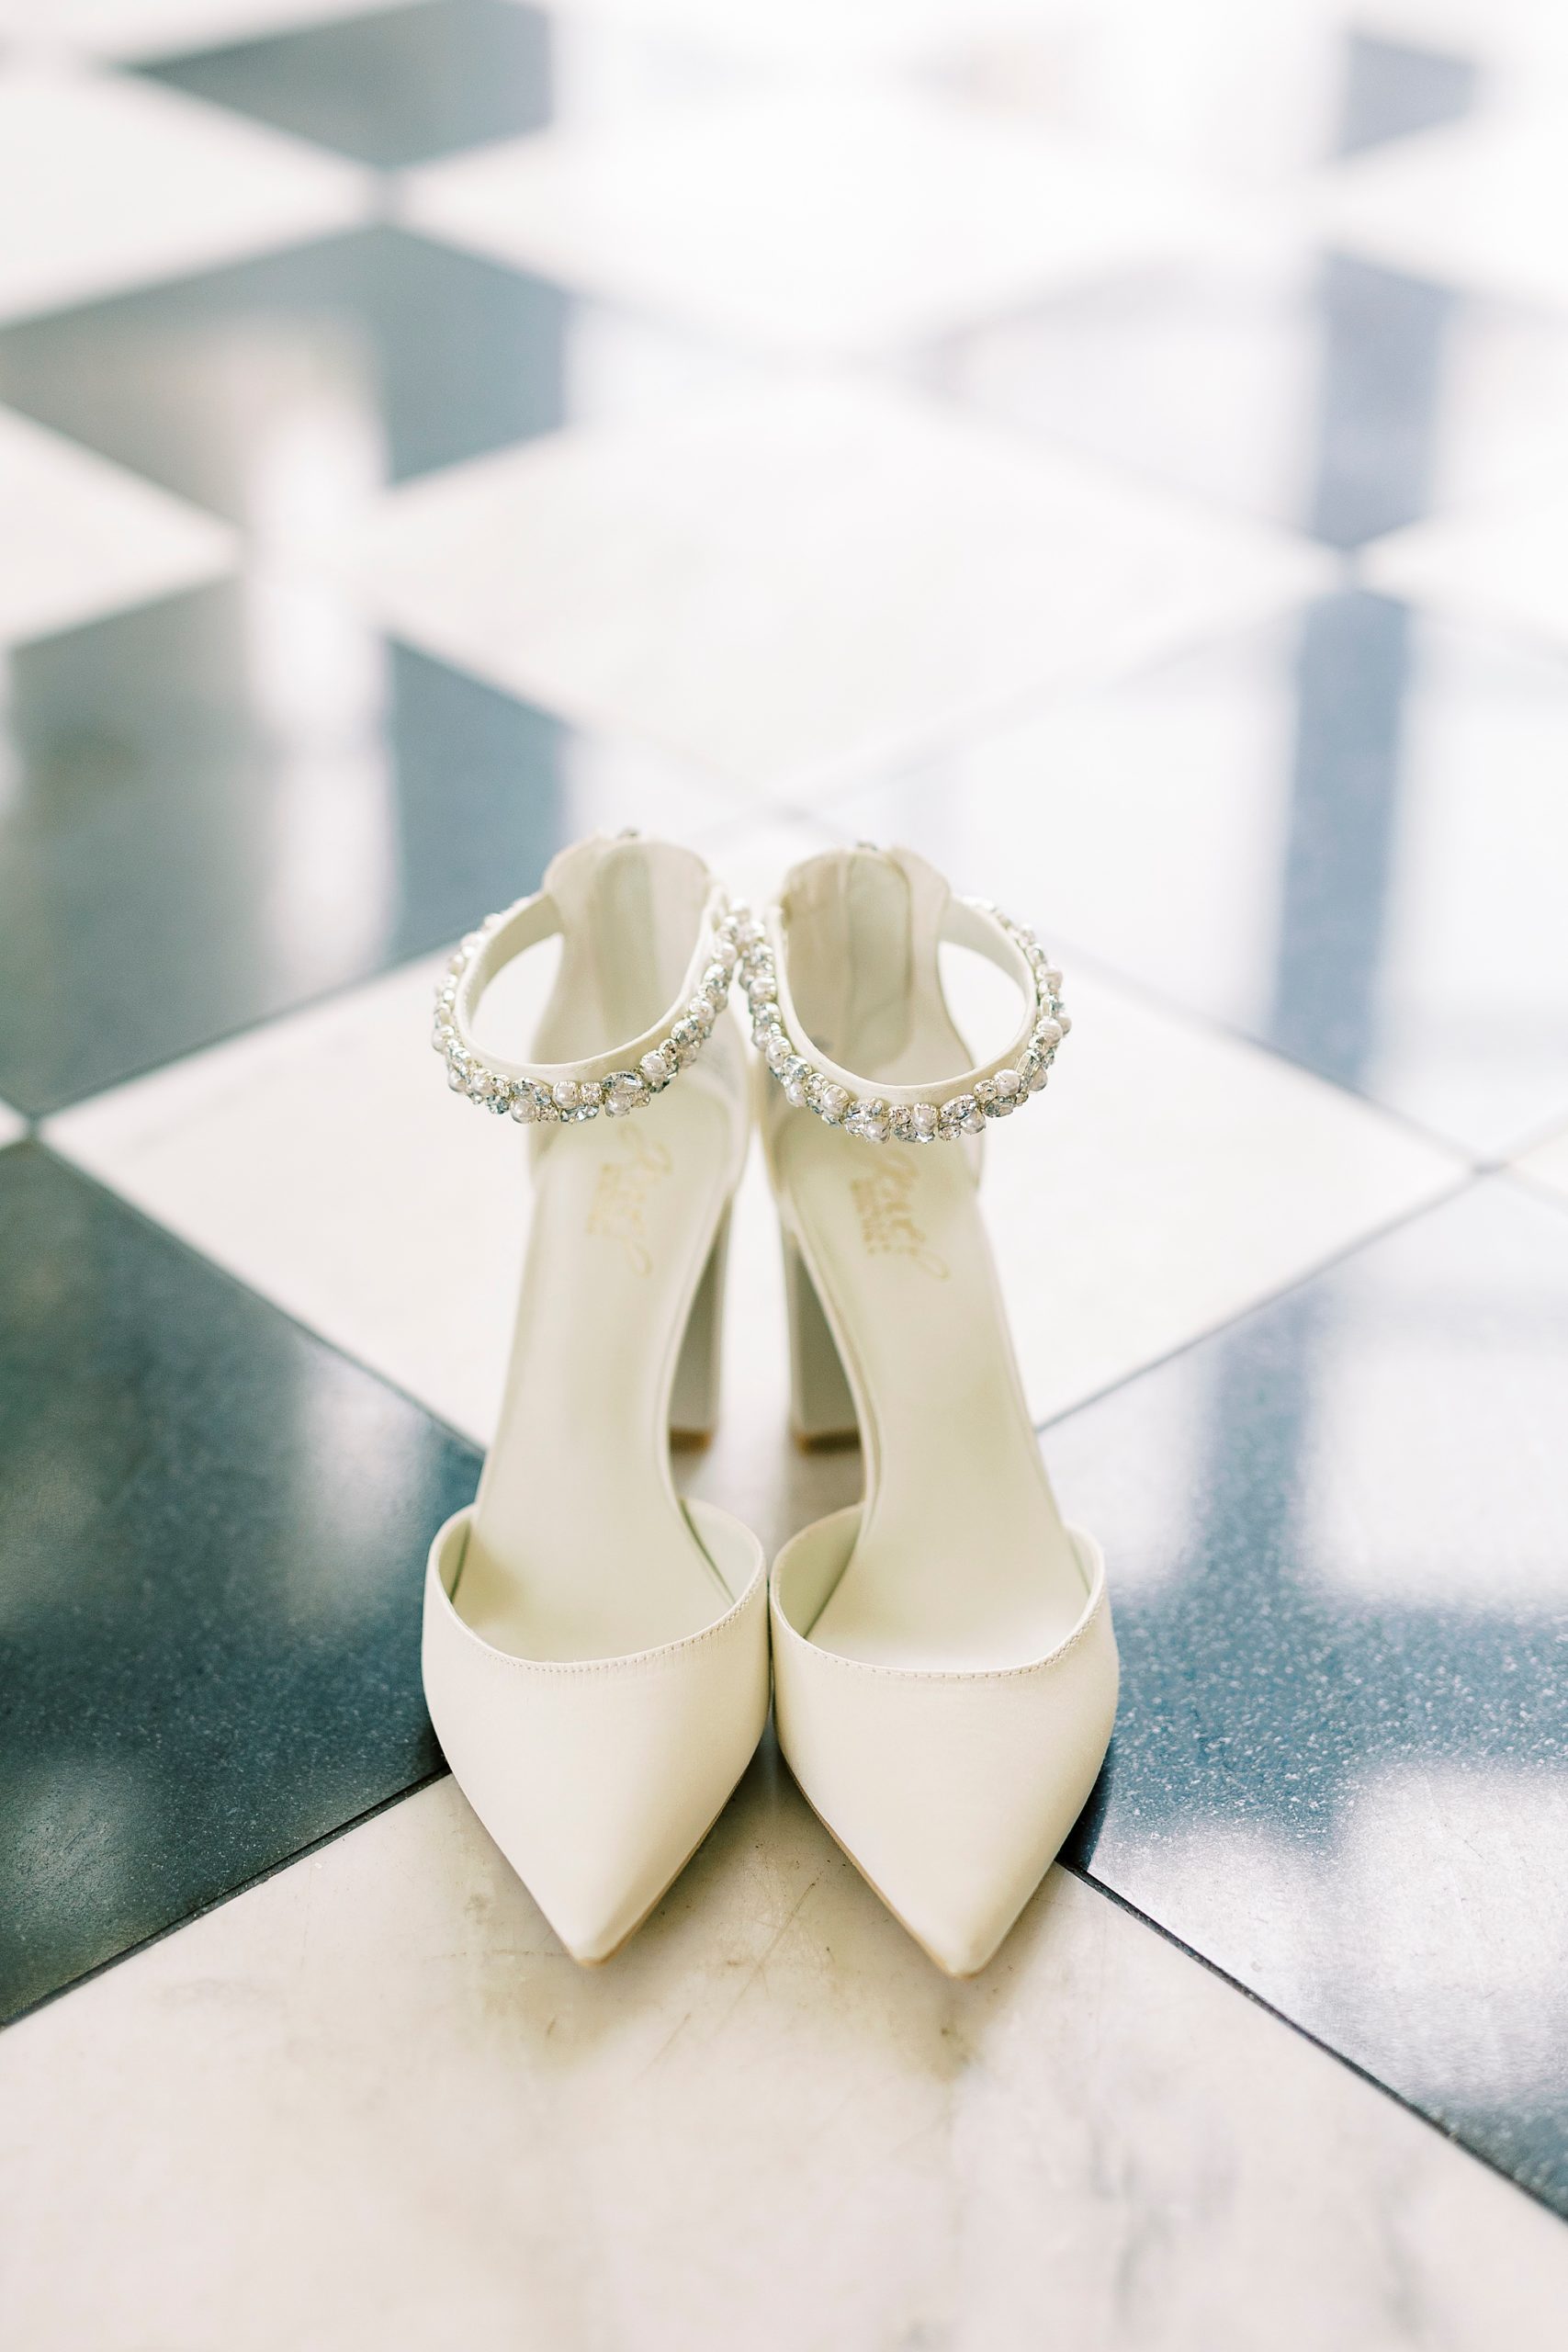 bride's white shoes rest on black and white floor at Separk Mansion 